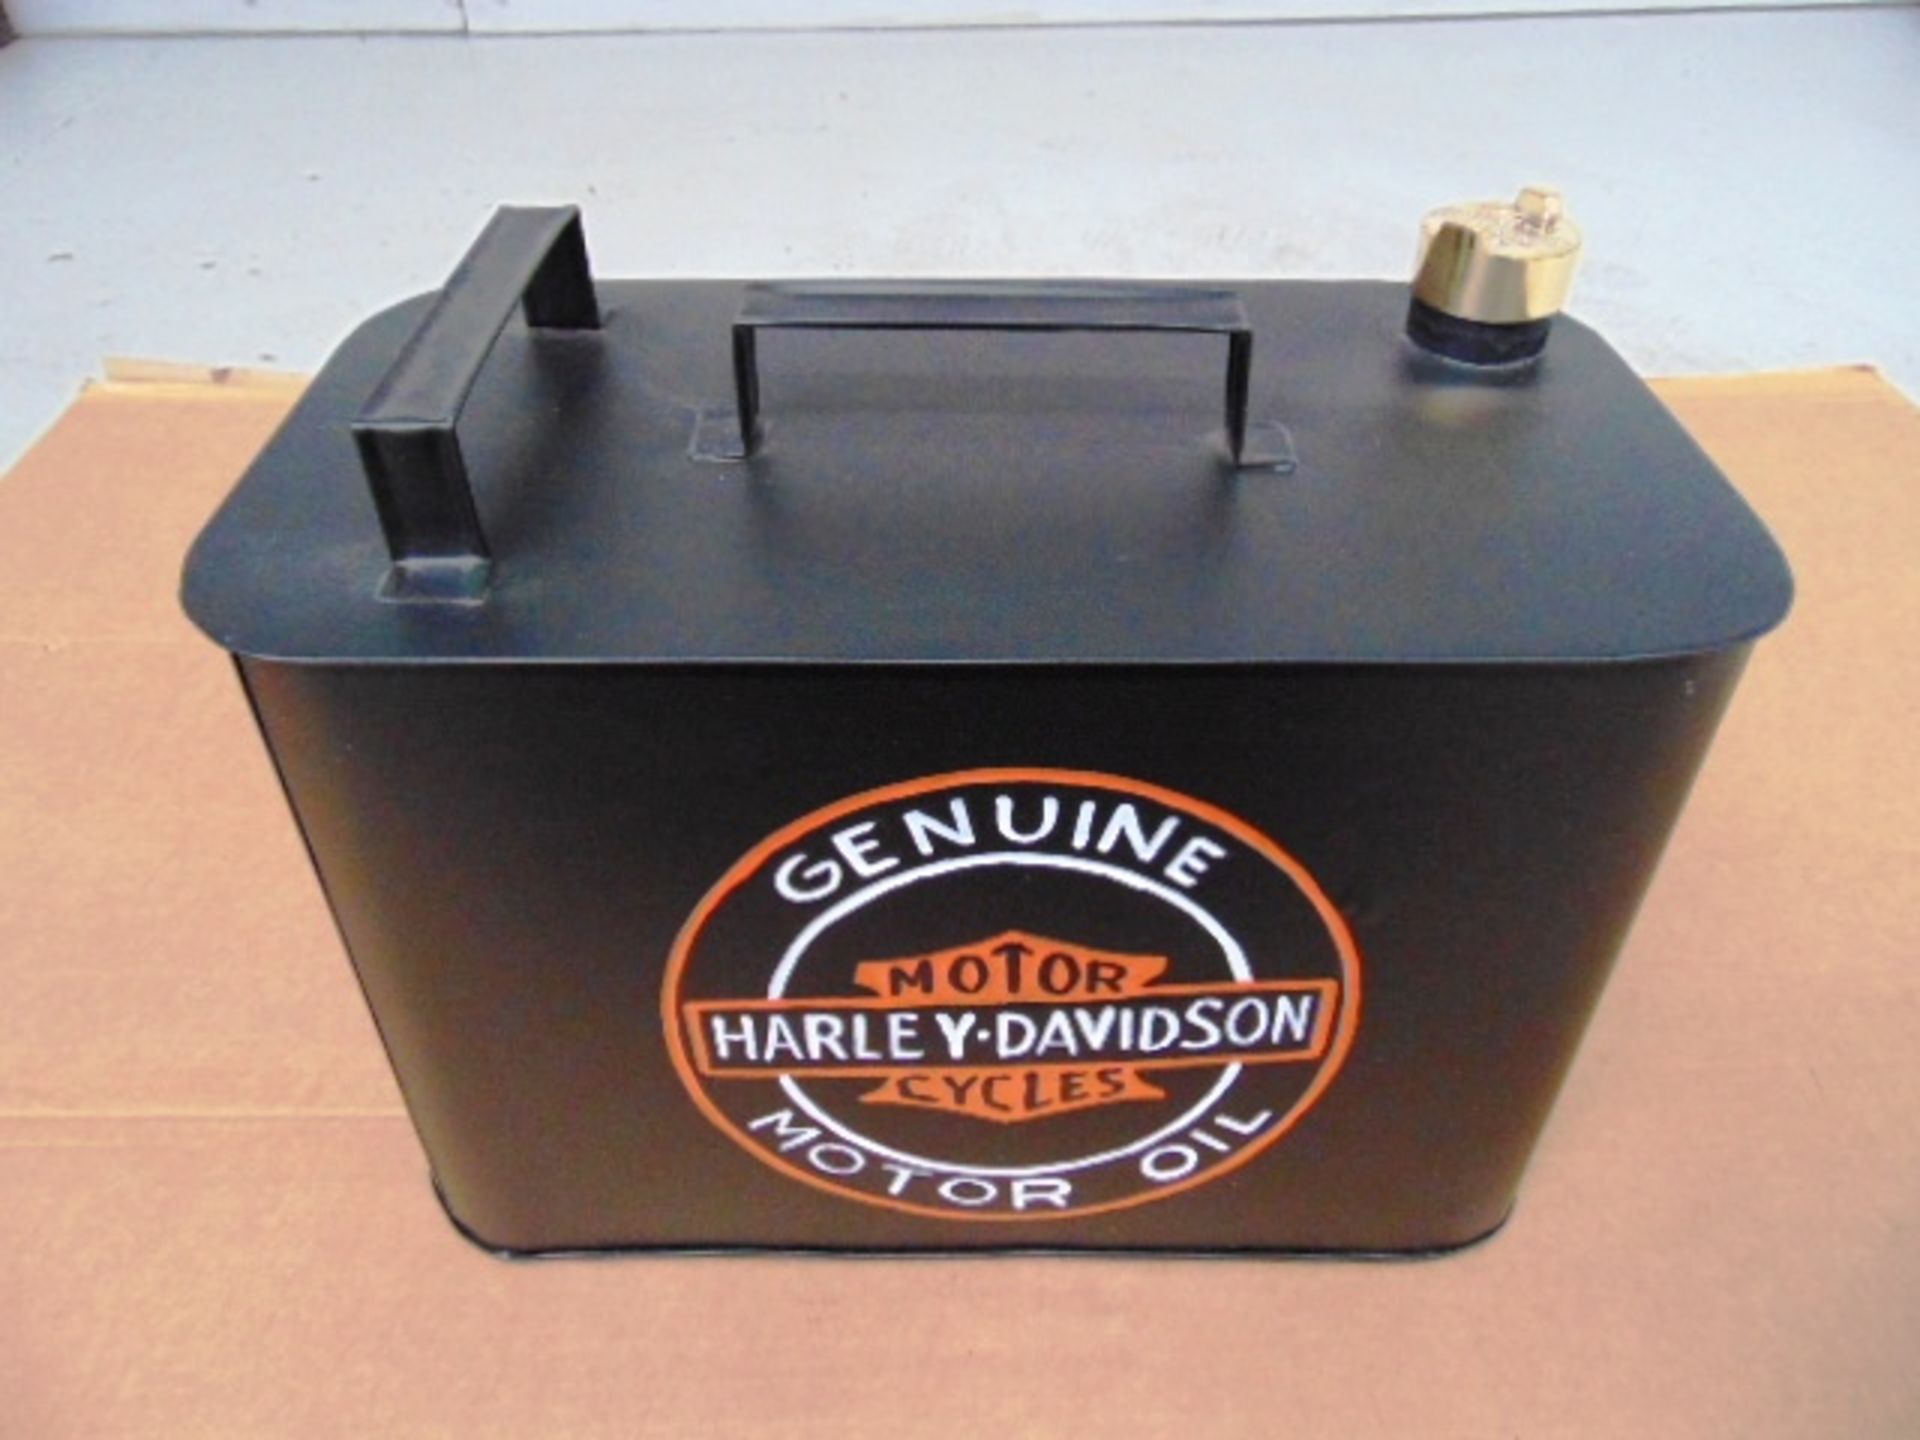 Harley Davidson Branded Oil Can - Image 2 of 5